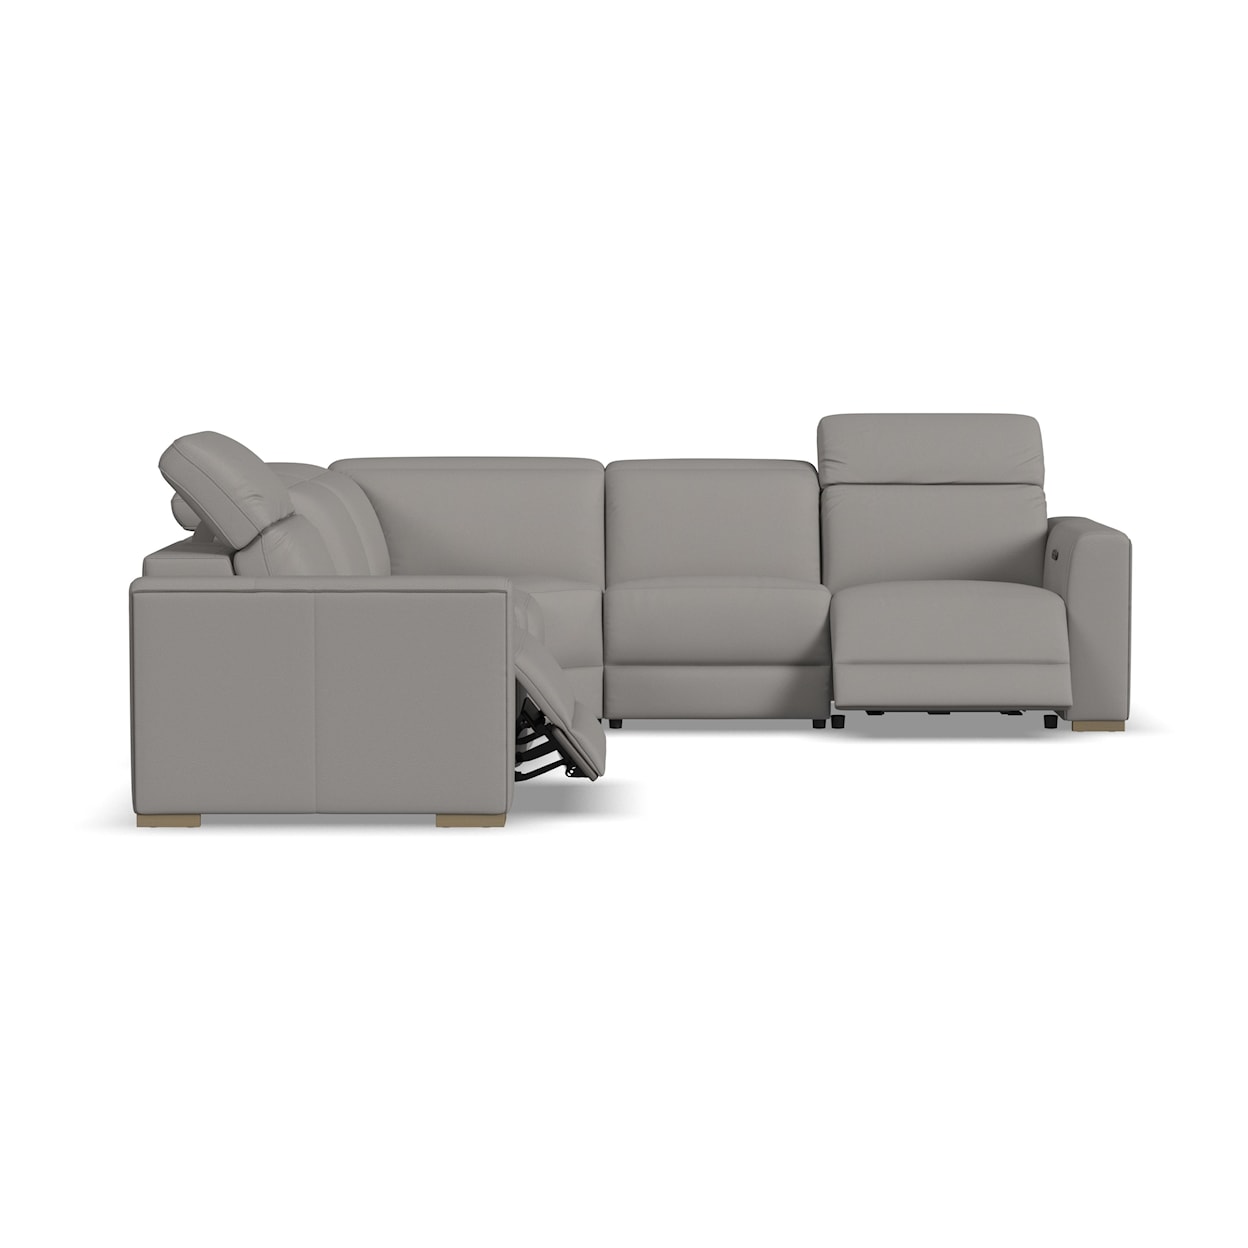 Flexsteel Aurora Sectional Sofa